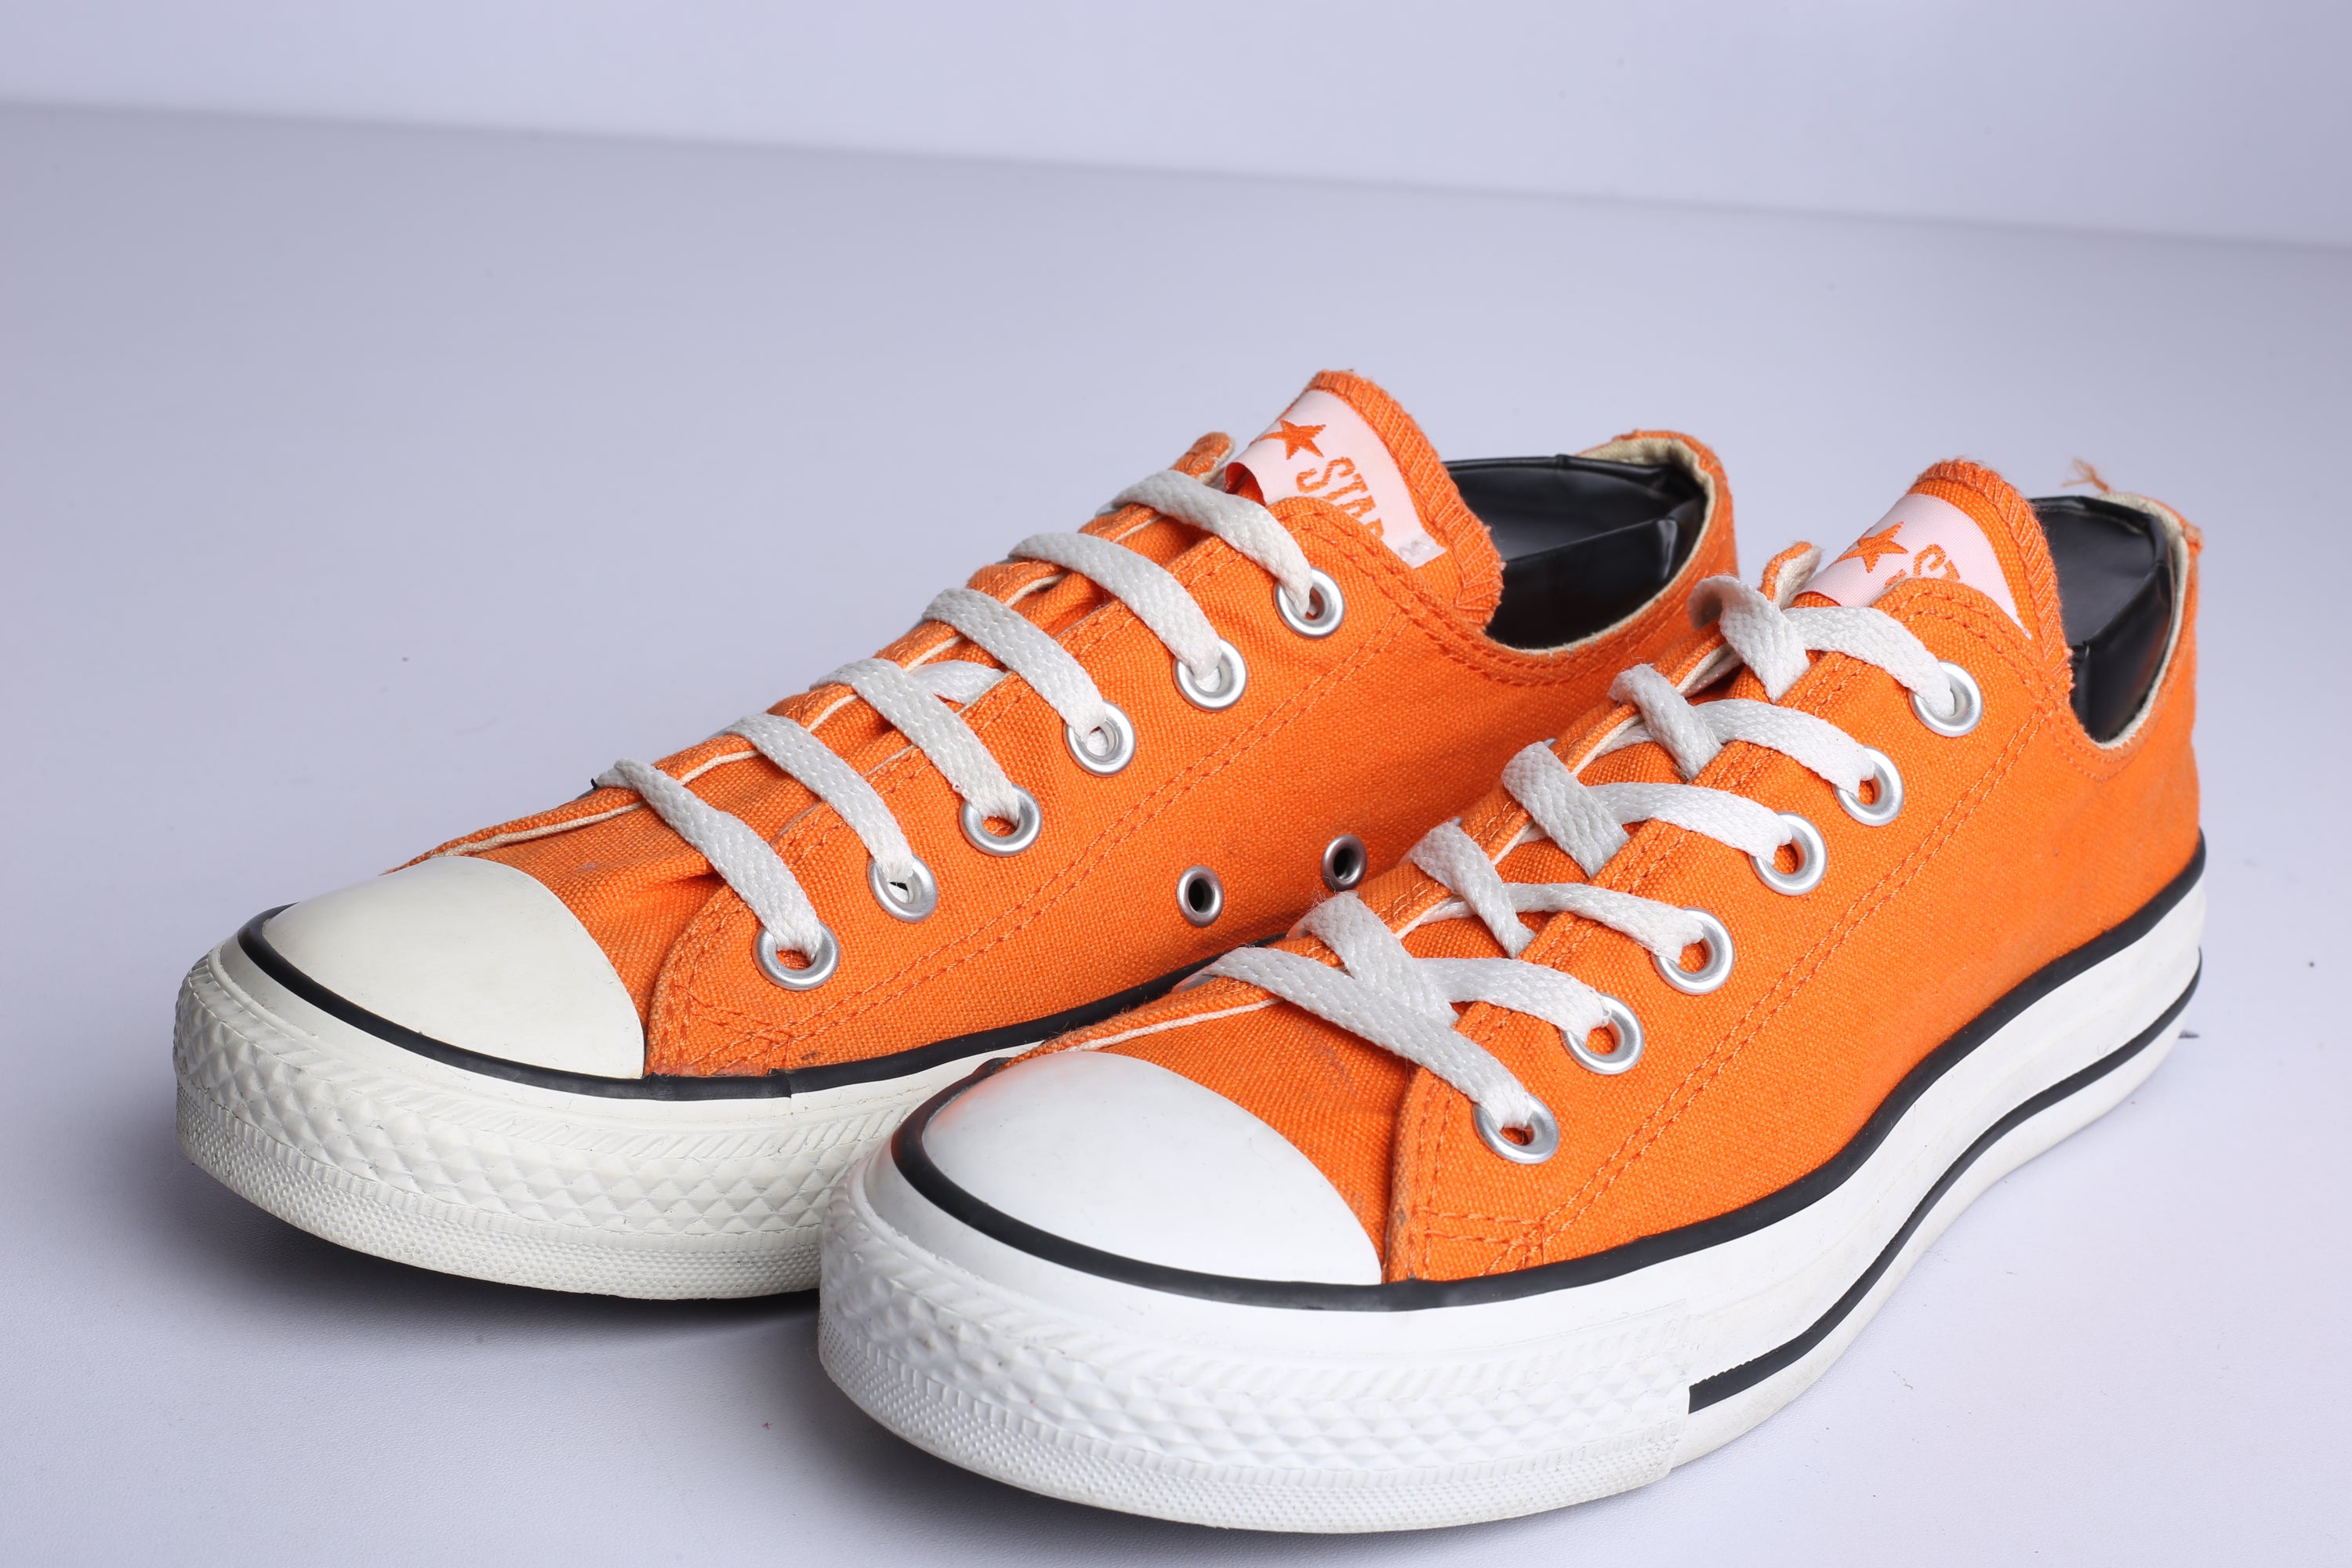 Chuck Taylor All Star Low Dull Orange Sneaker - (Condition Premium)